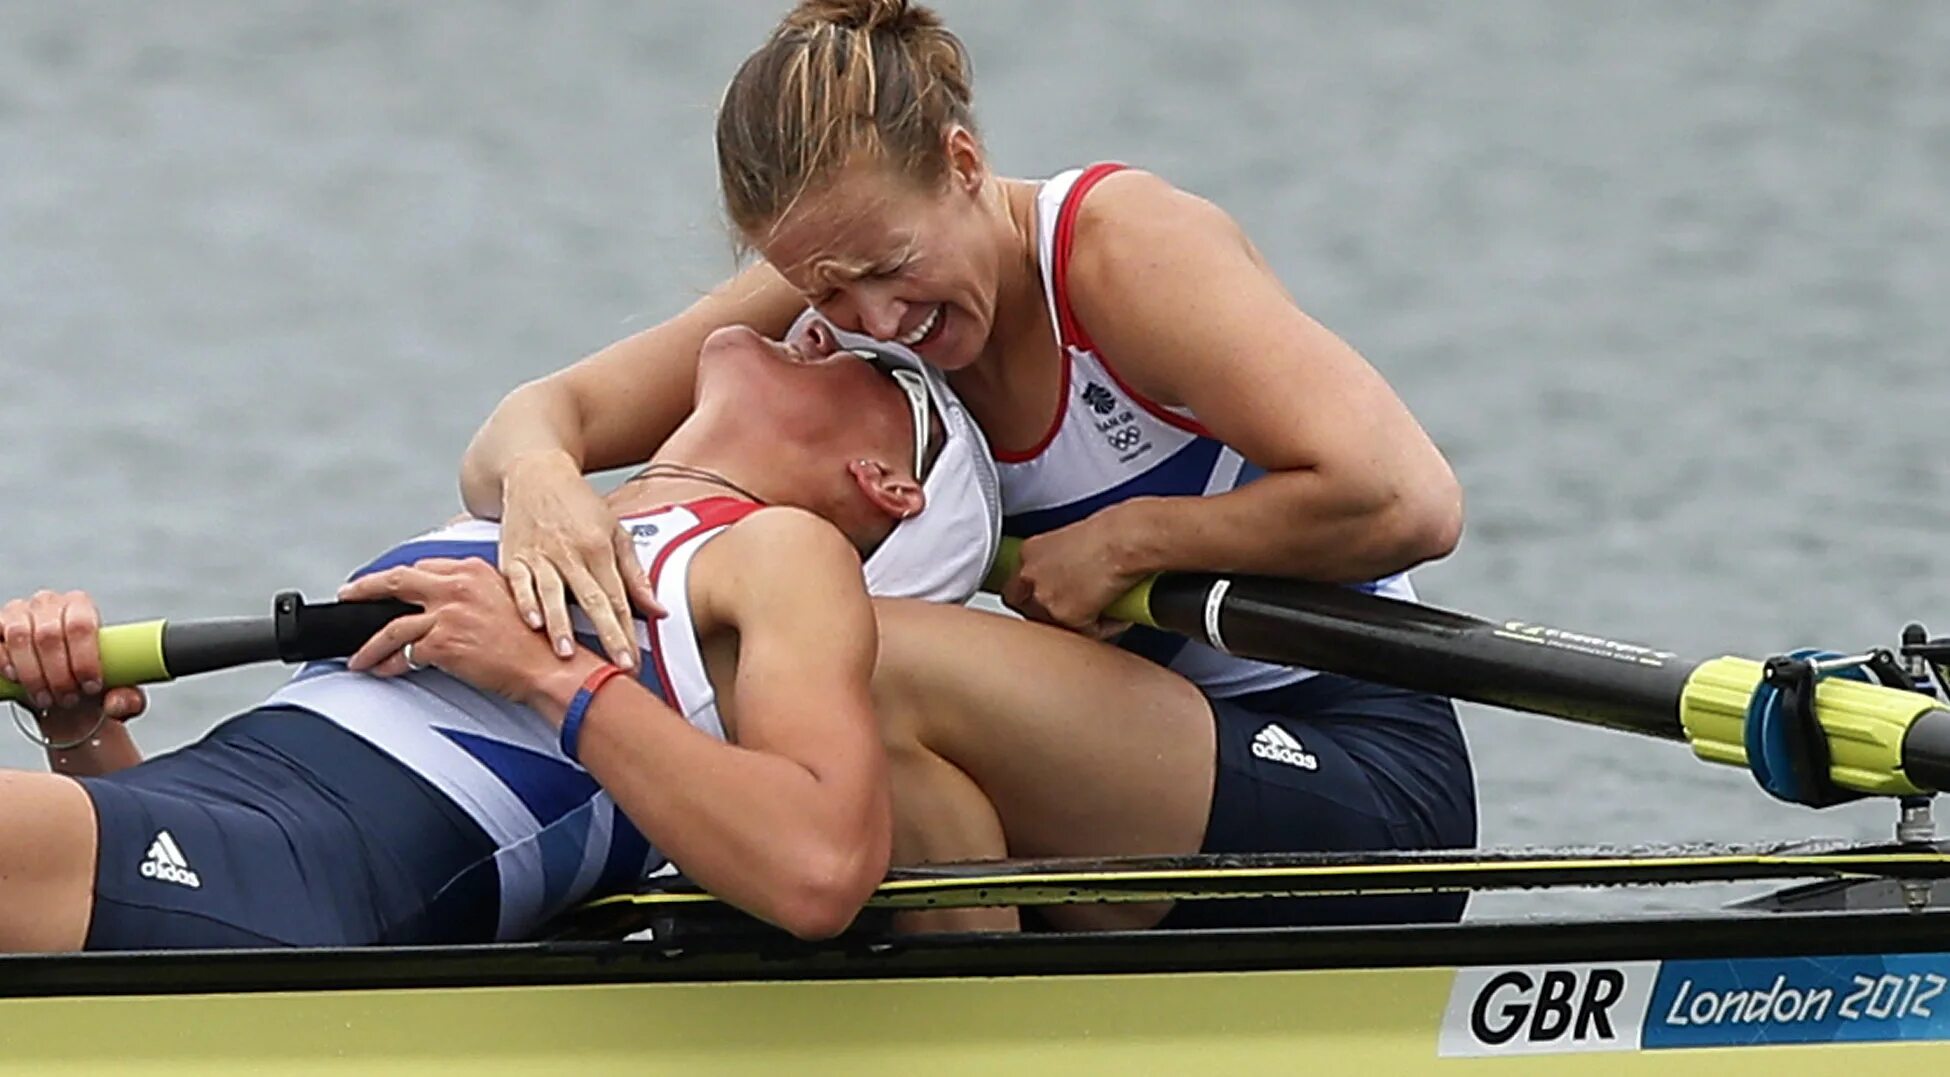 More win sports. Академическая гребля красивые фото. Лондон 2012 Академическая гребля фото. Rowing women. Olympic 1992 Rowing.